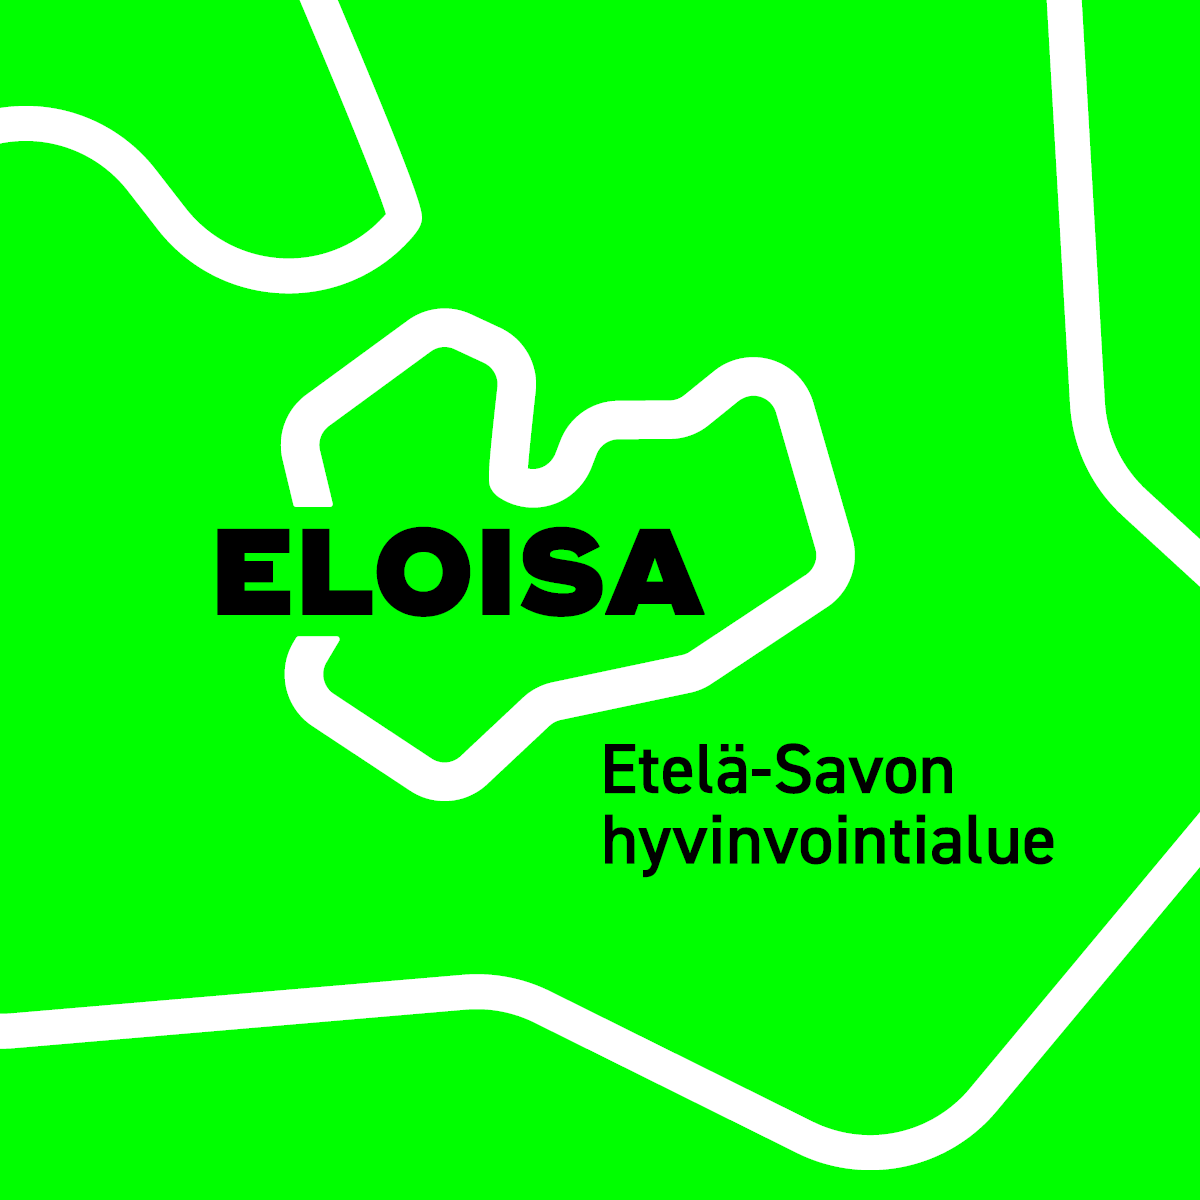 ELOISA_etela-savon_hyvinvointialue_1200x1200_atk-messut_kuvitus_1_2023_1.png